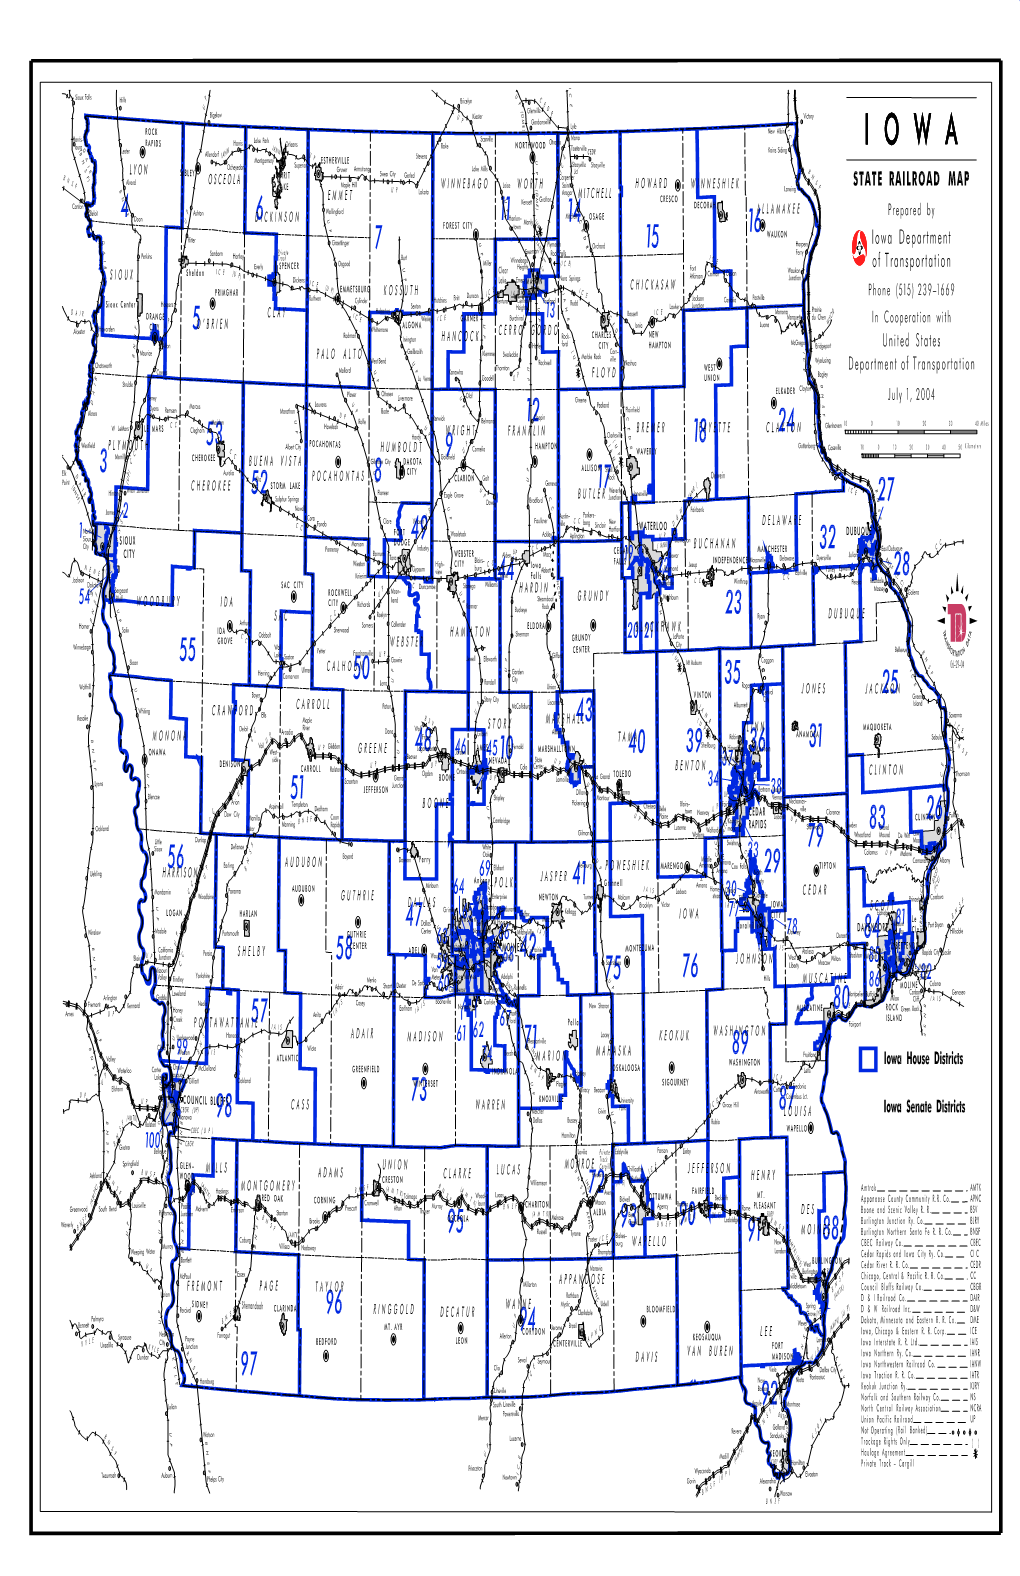 Iowa Railroad Maps Overlaid Housemap7-1-04.Pdf